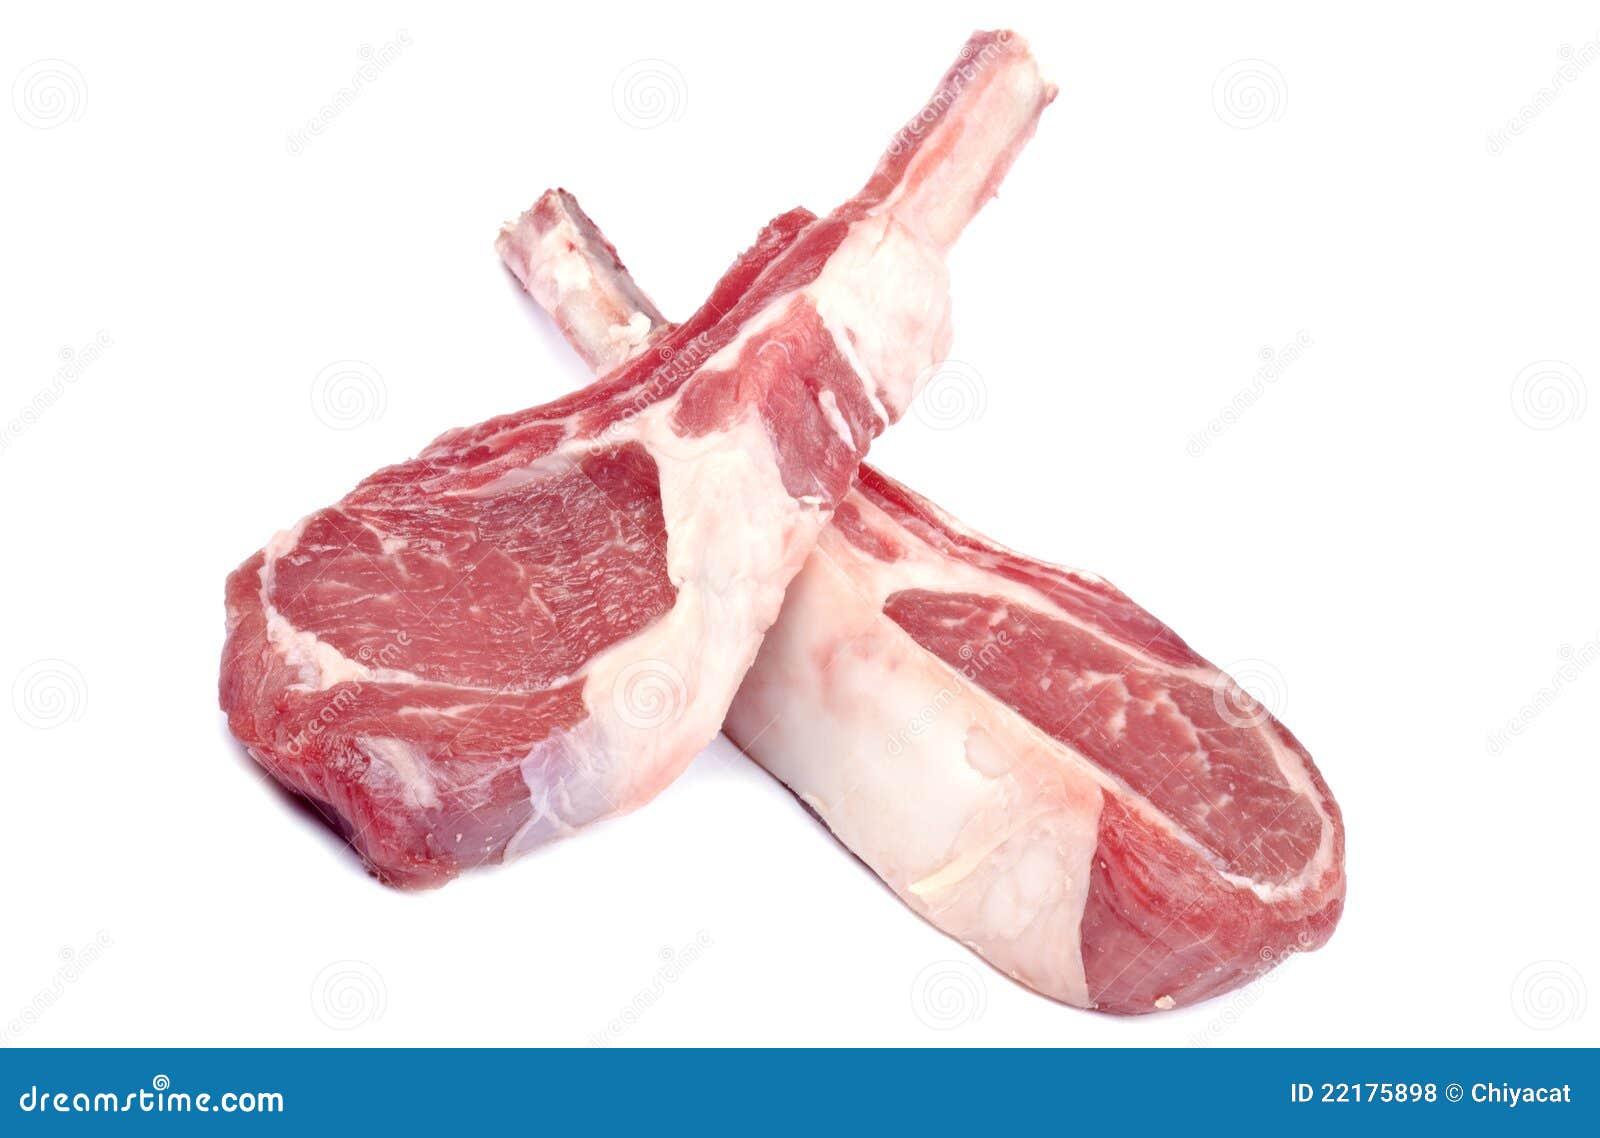 raw lamb chops